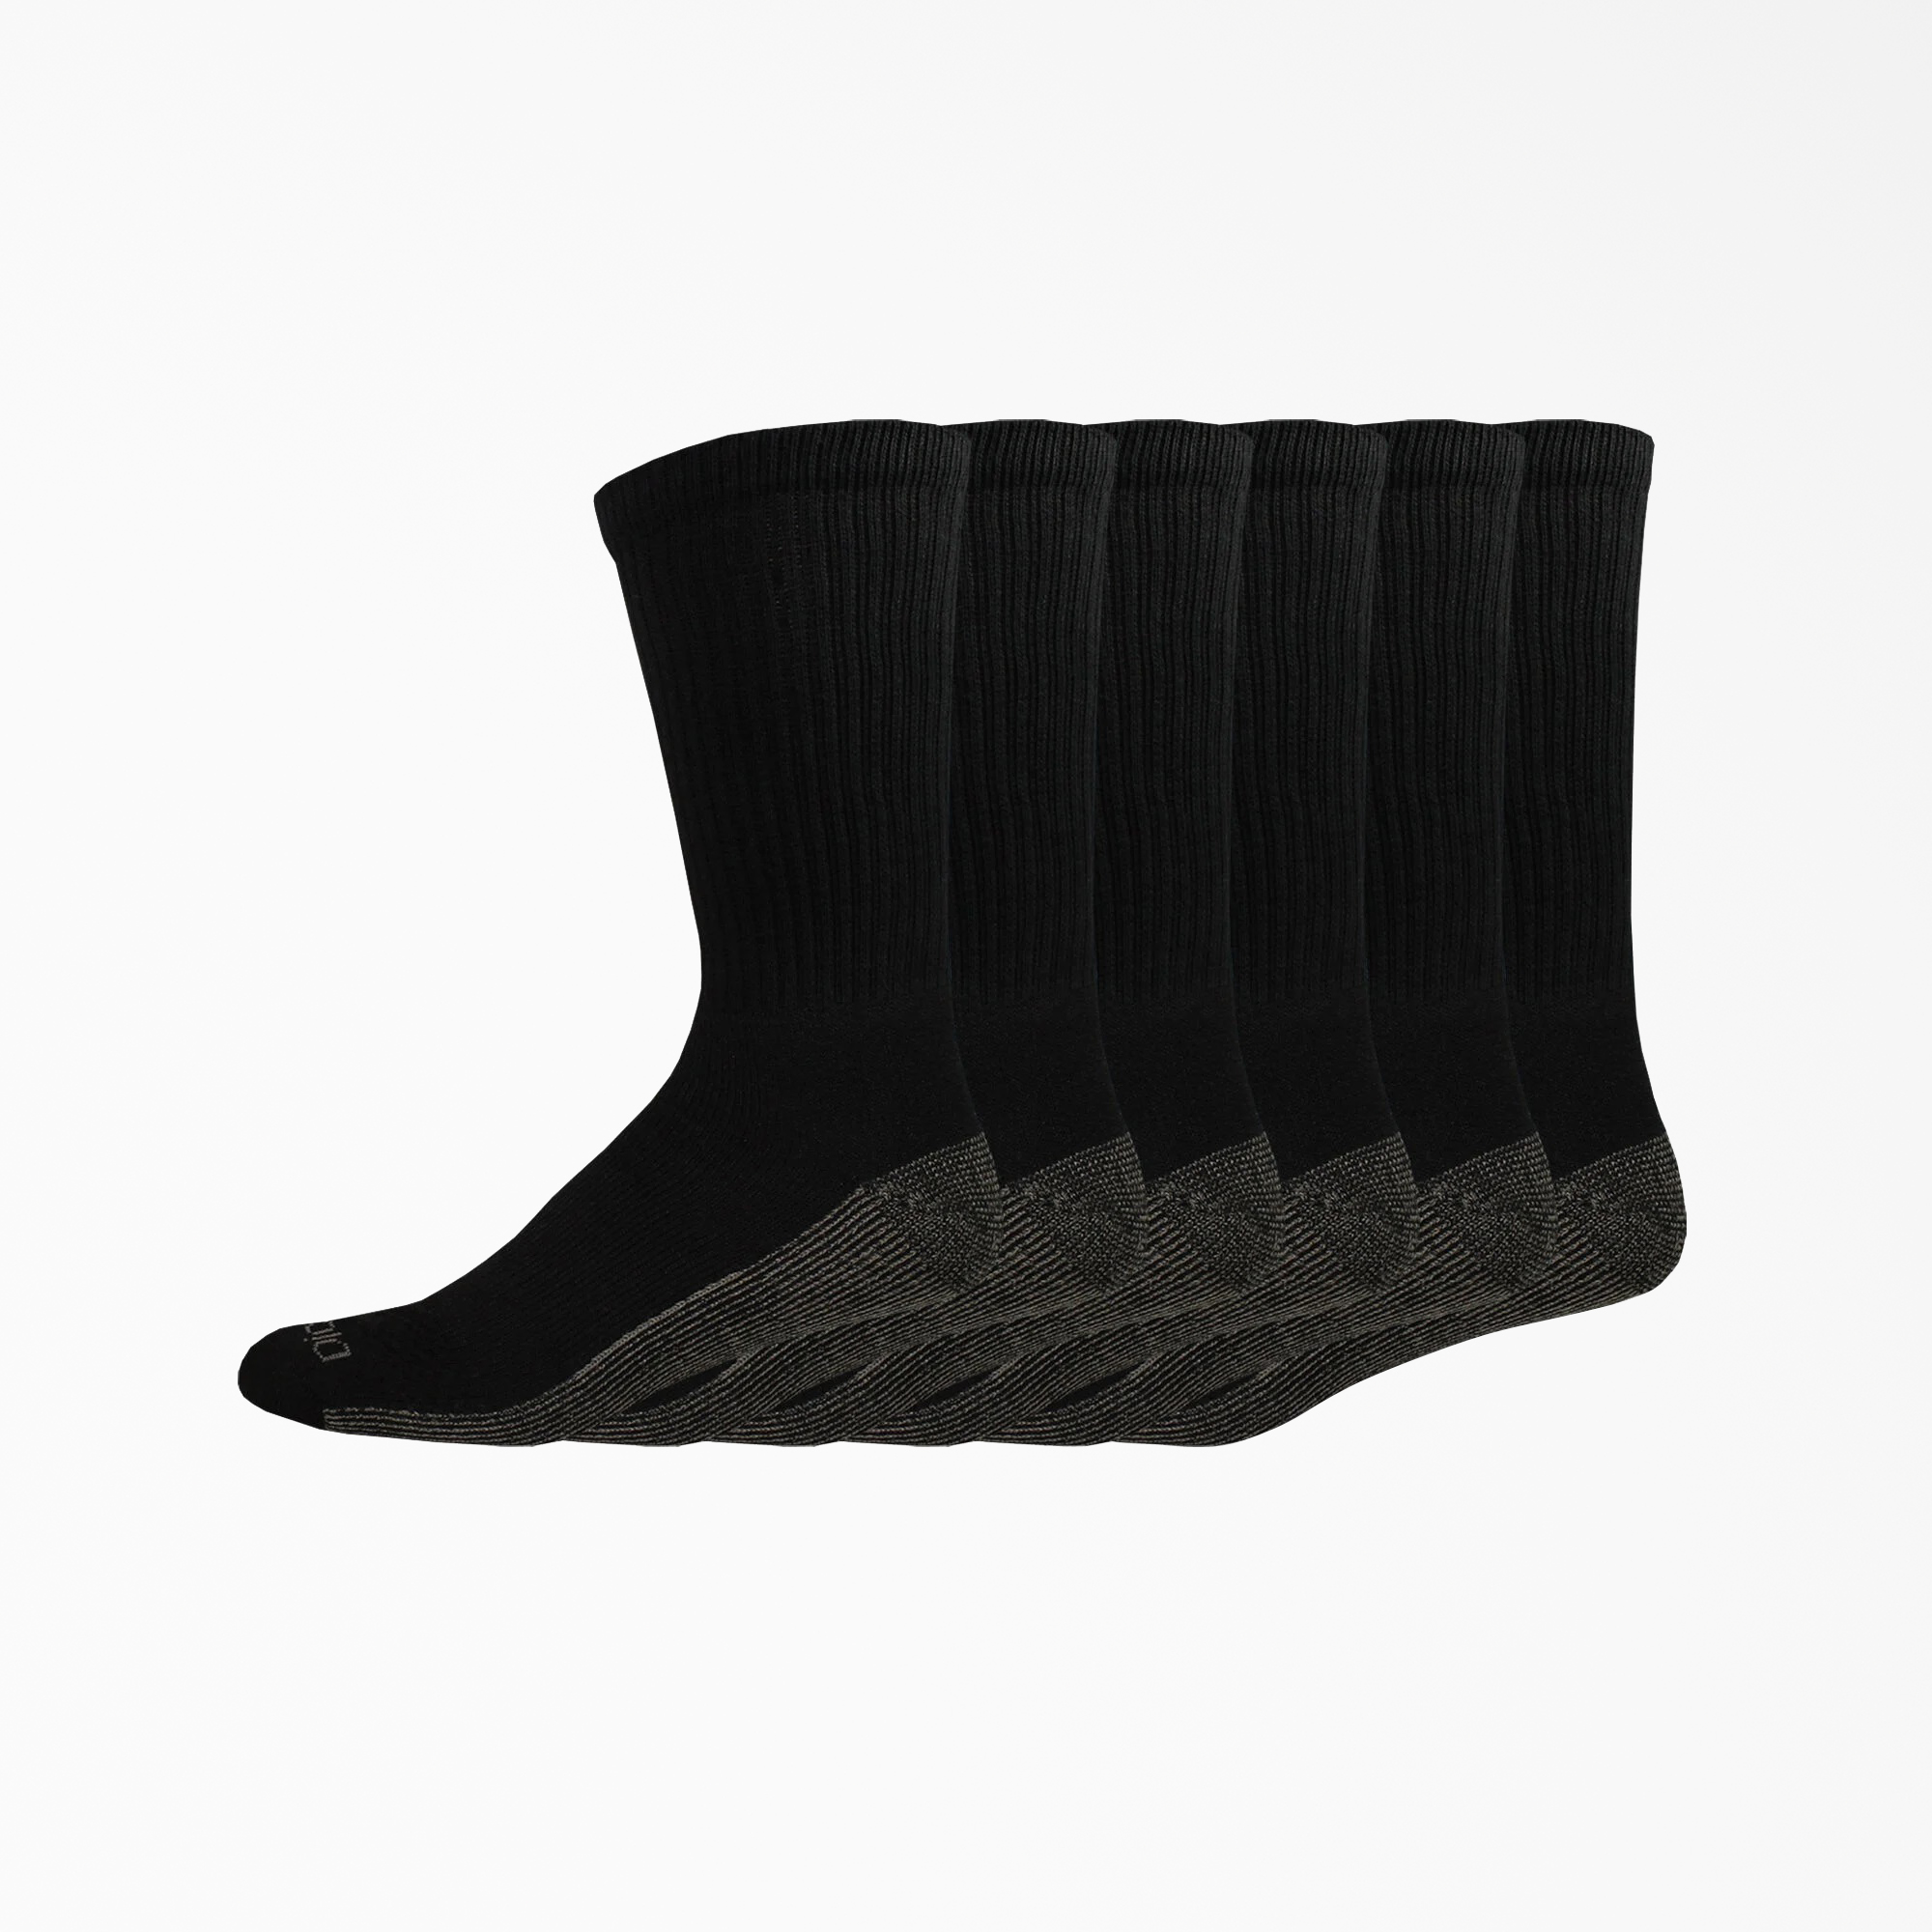 Moisture Control Crew Socks, 6-Pack - Black (BK)